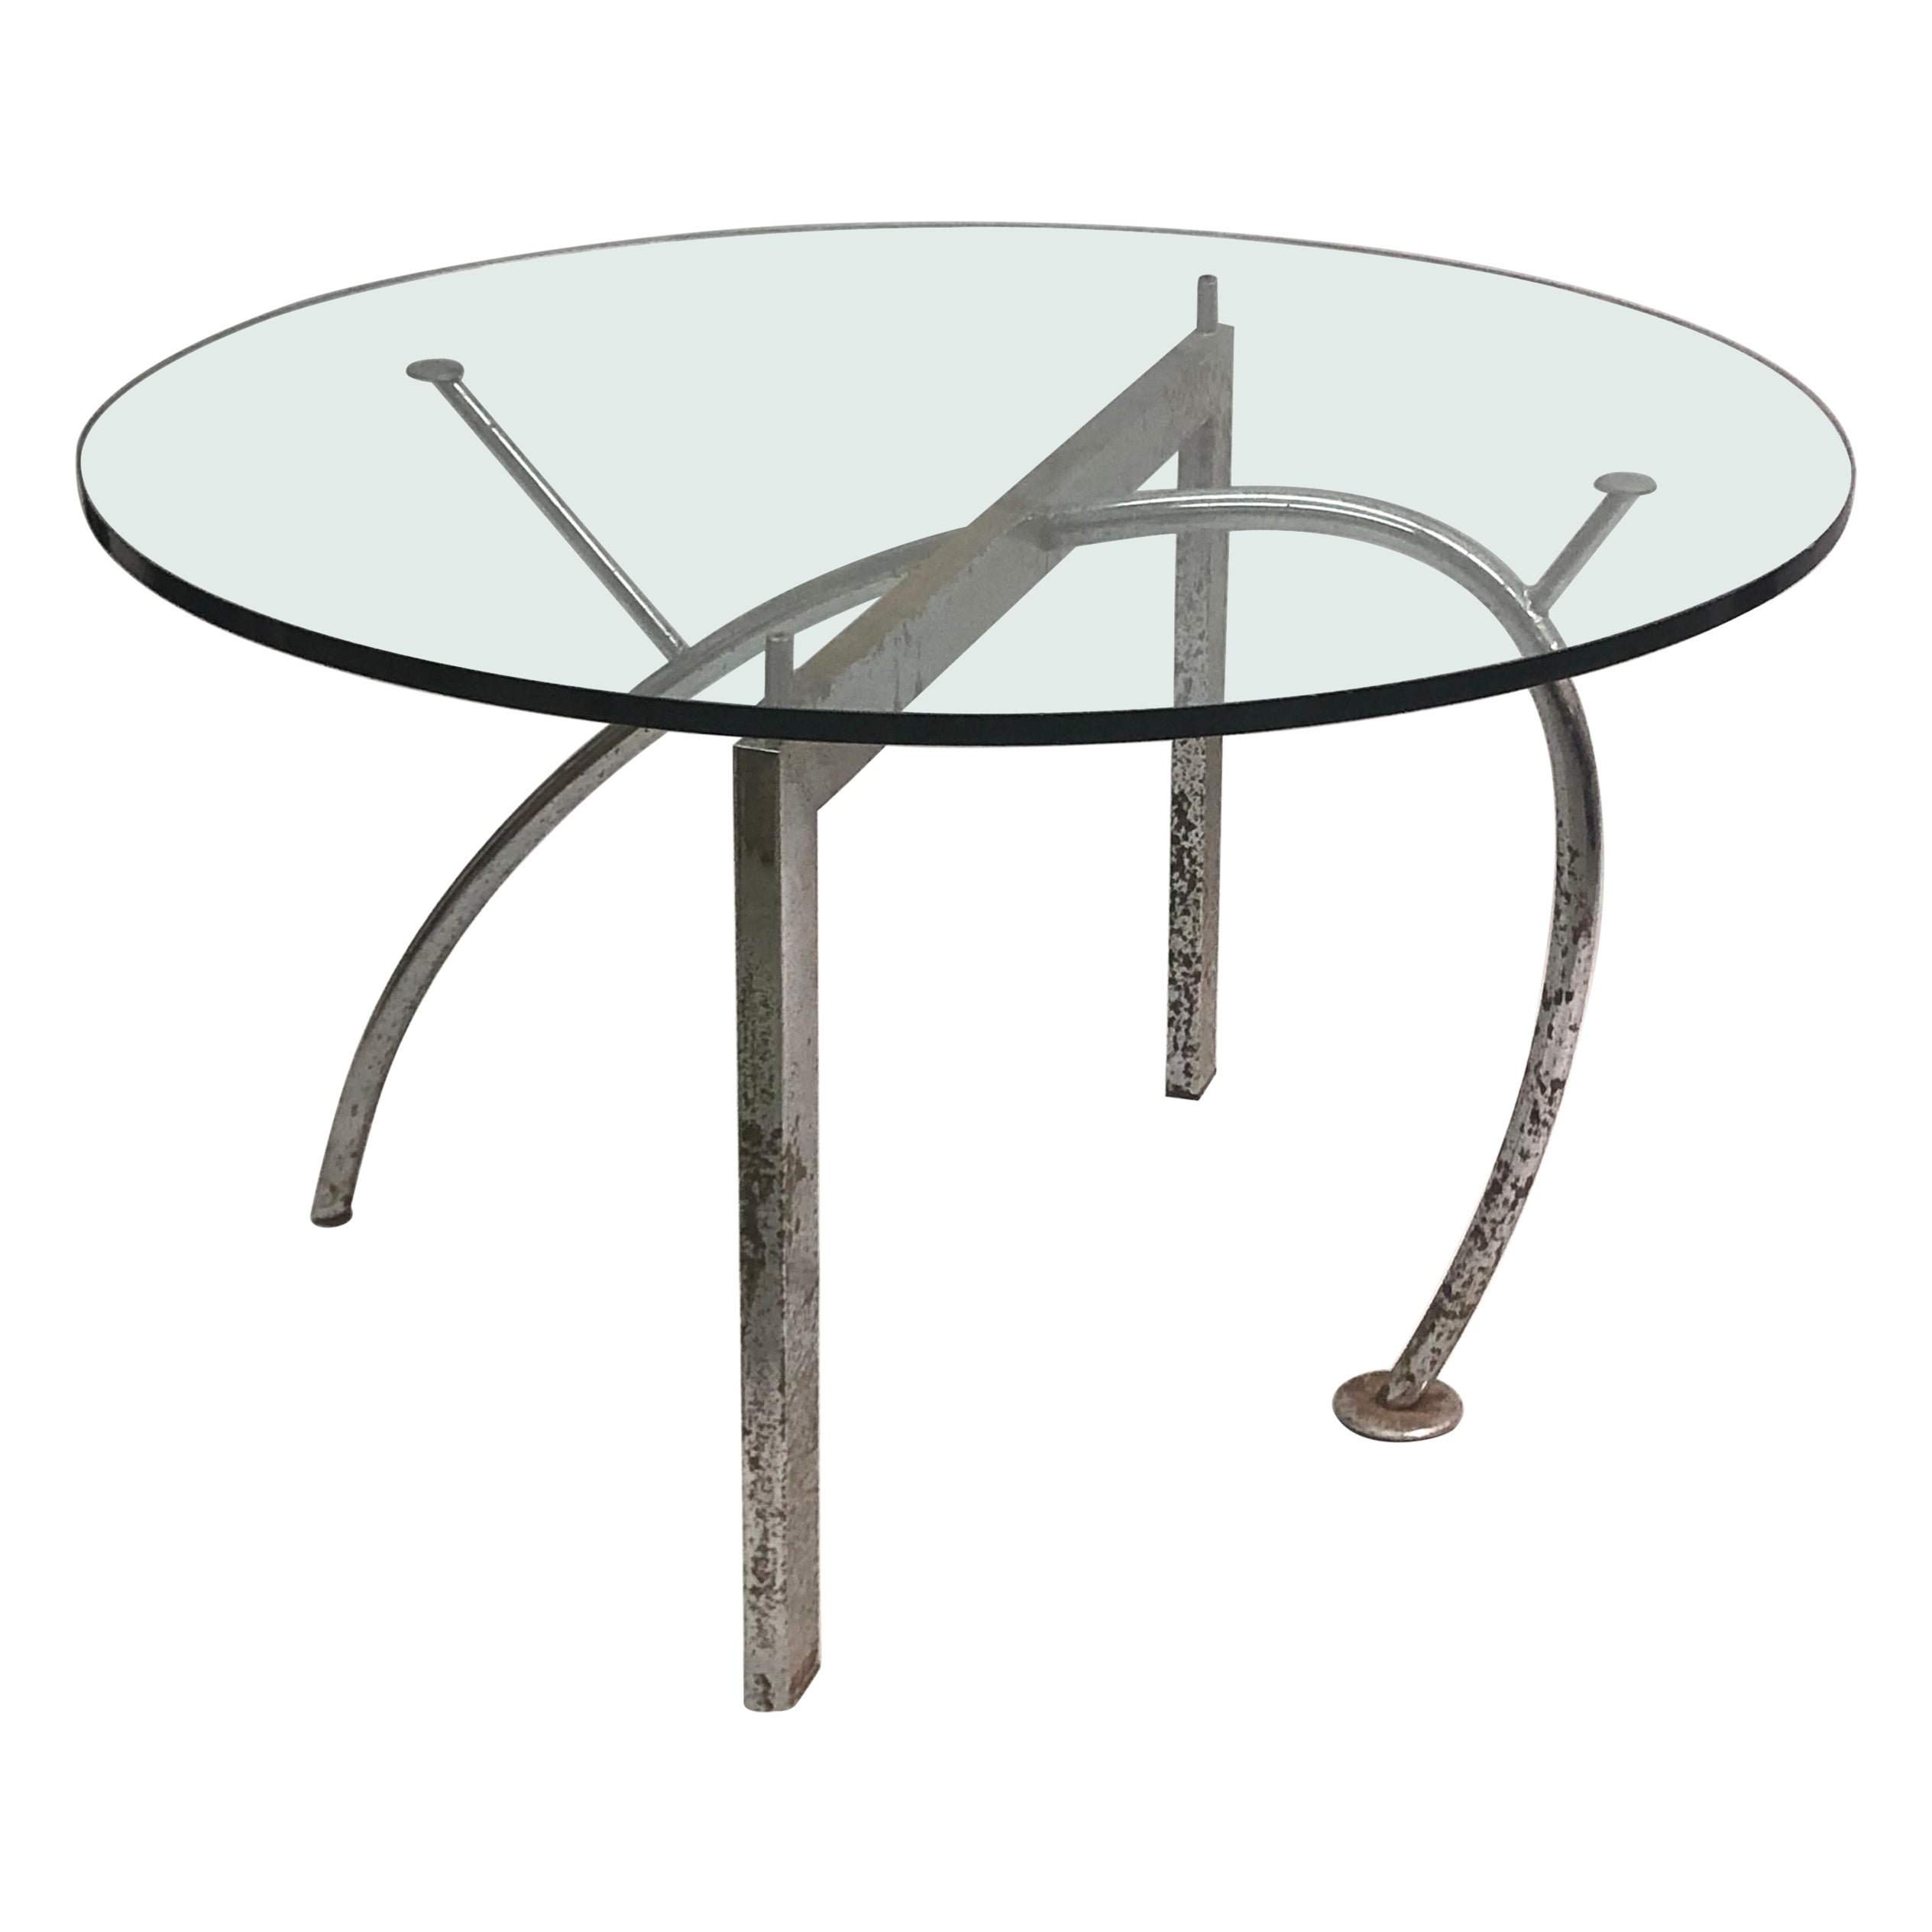 Prototype de table à manger ronde italienne post-moderne de Massimo Iosa Ghini